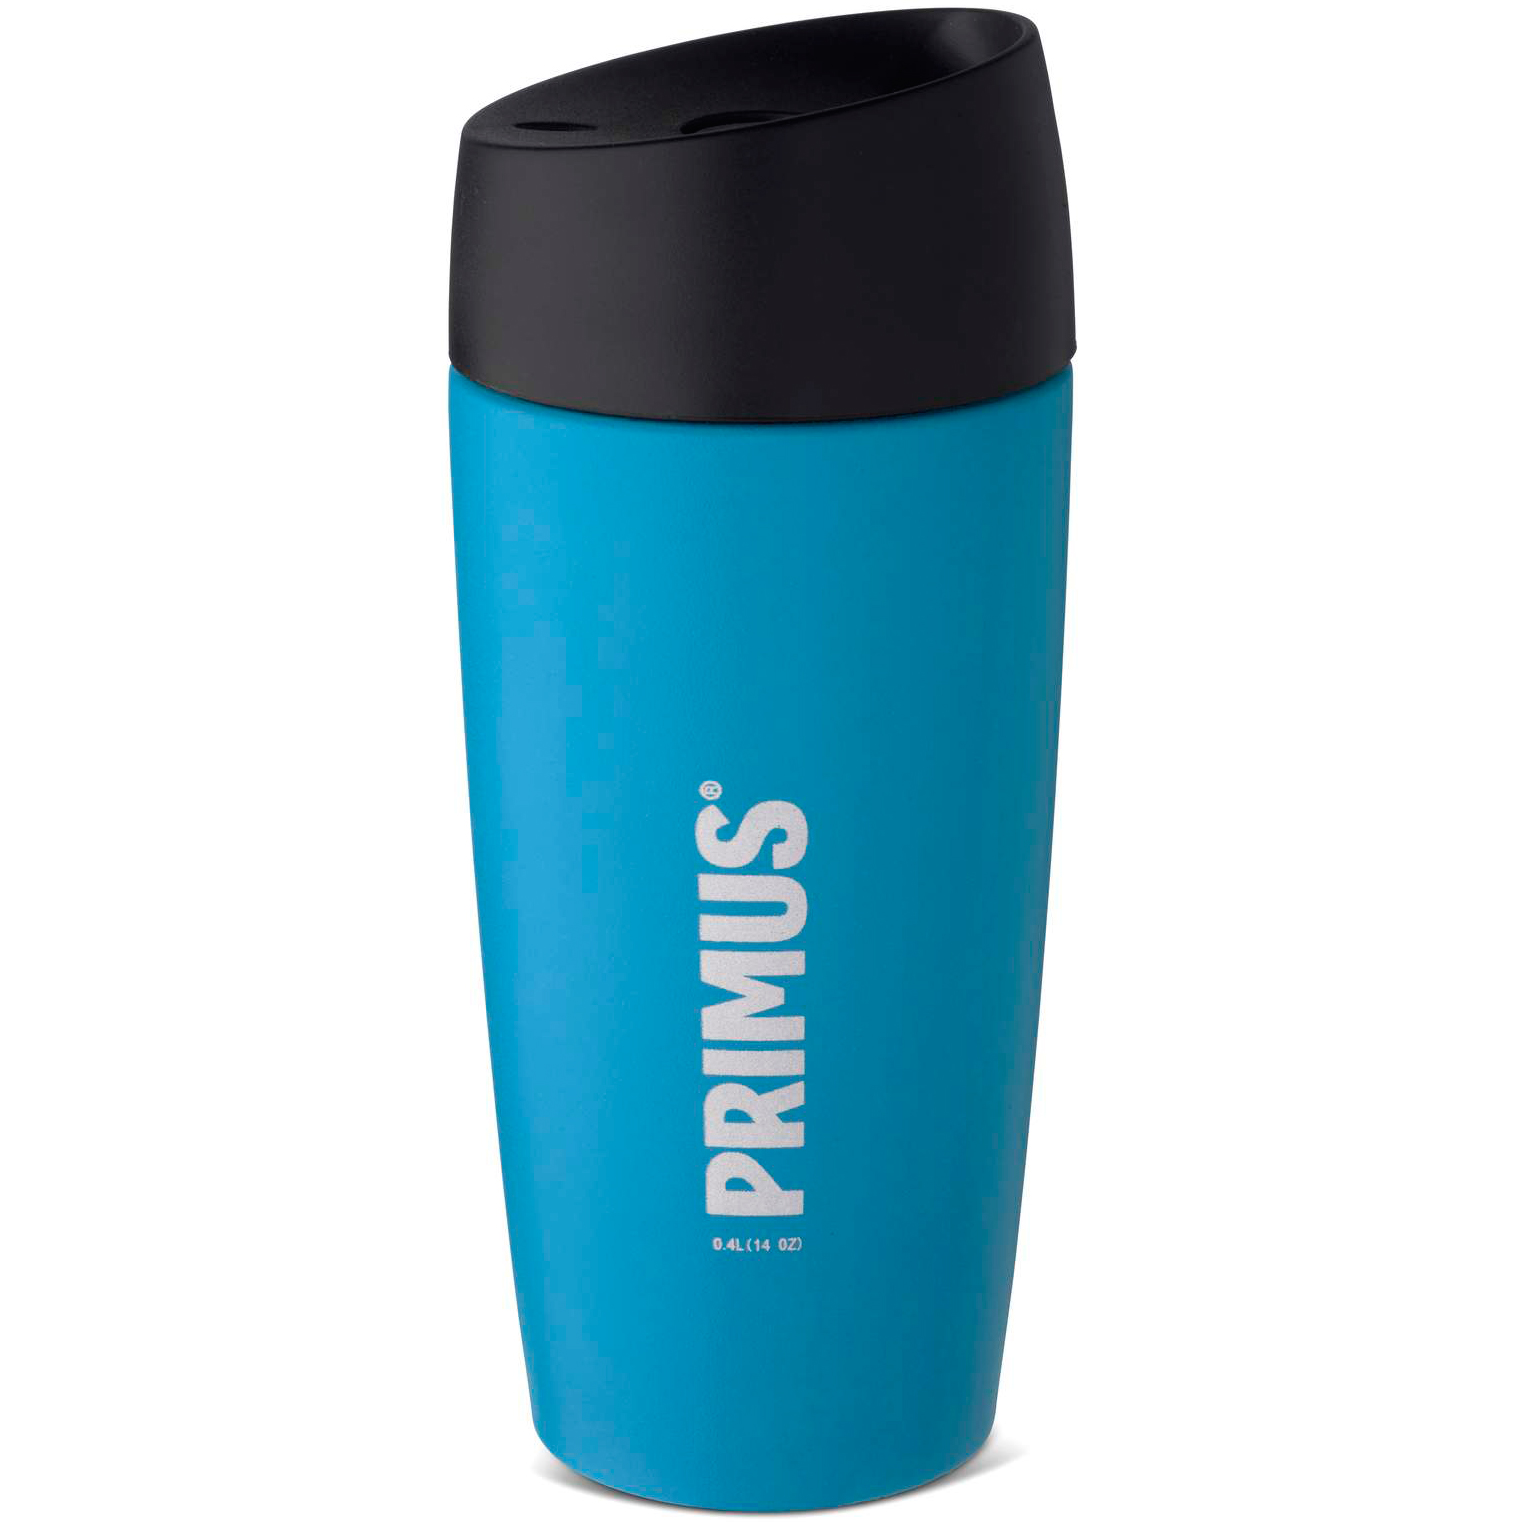 Productfoto van Primus Vacuum Commuter 0.4 Liter Thermo Mug - blue